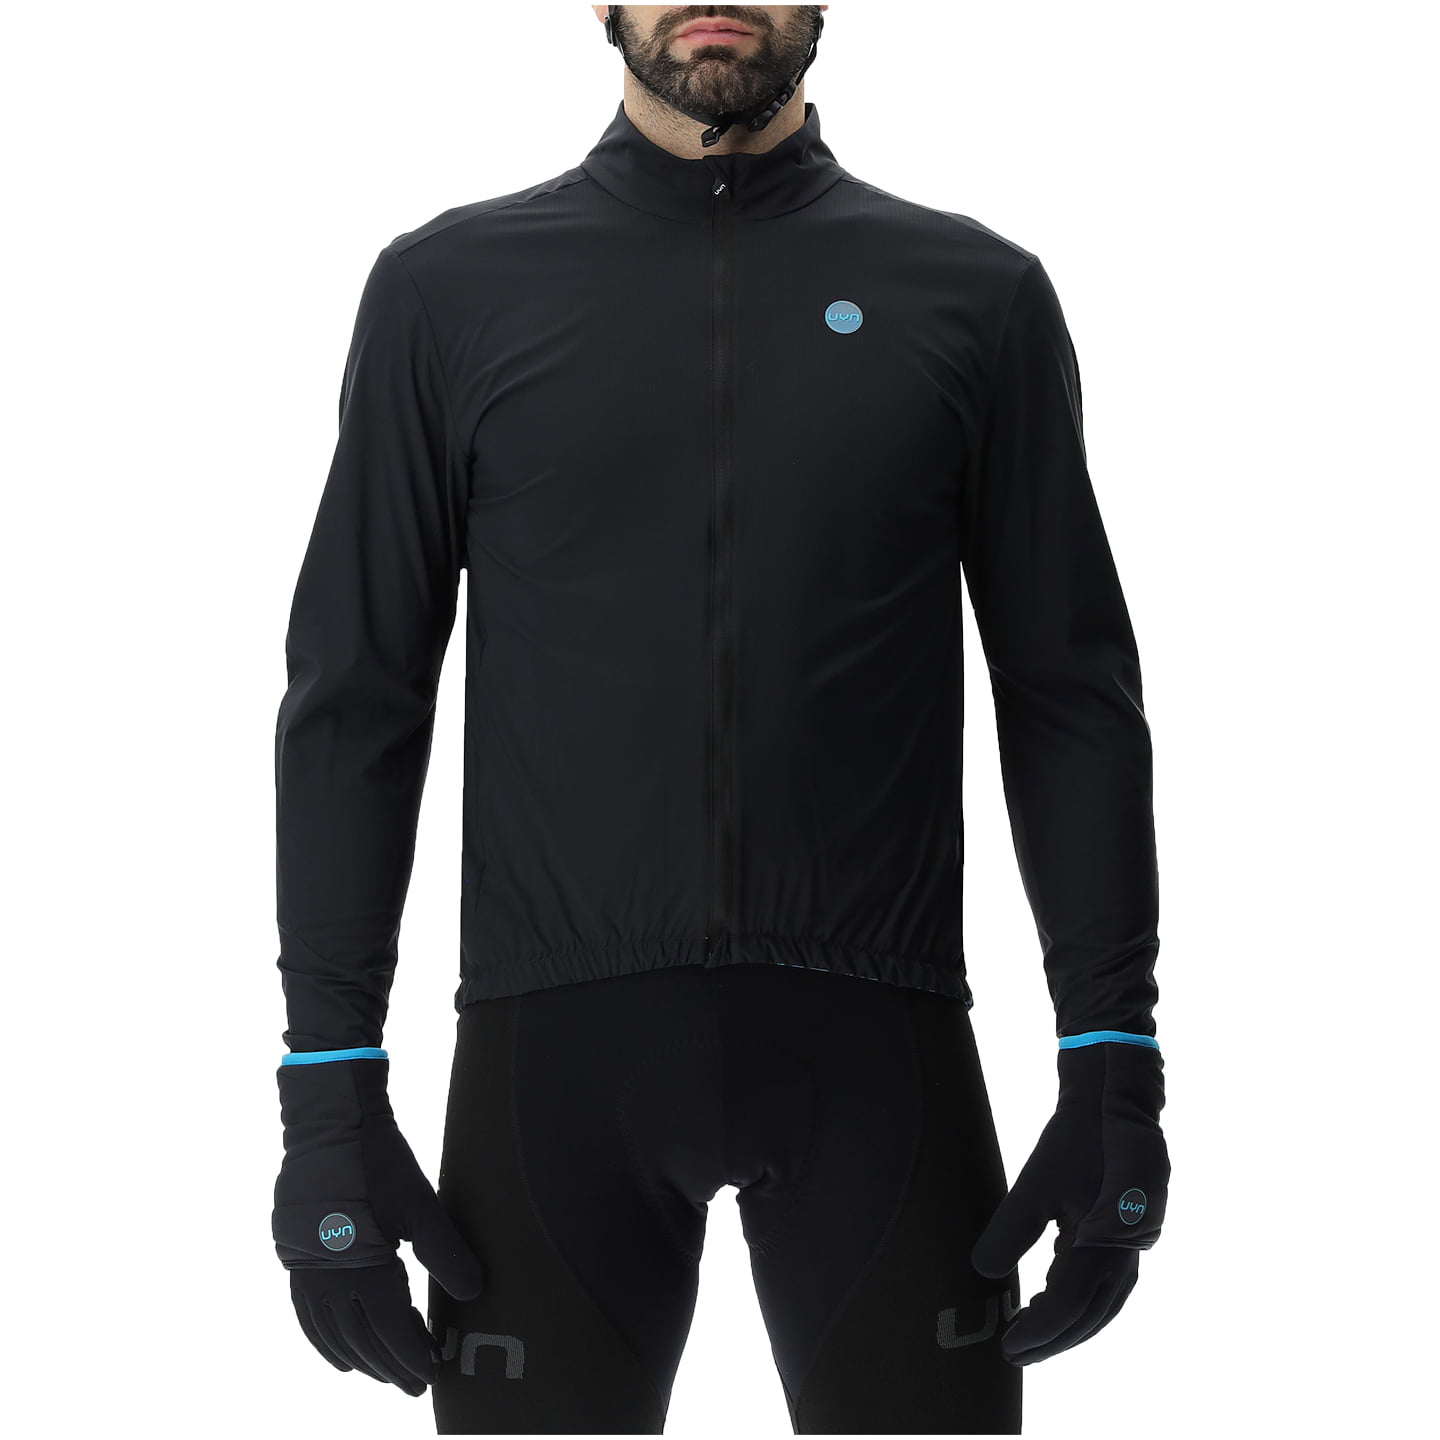 UYN Ultralight Wind Jacket, for men, size M, Bike jacket, Cycling clothing